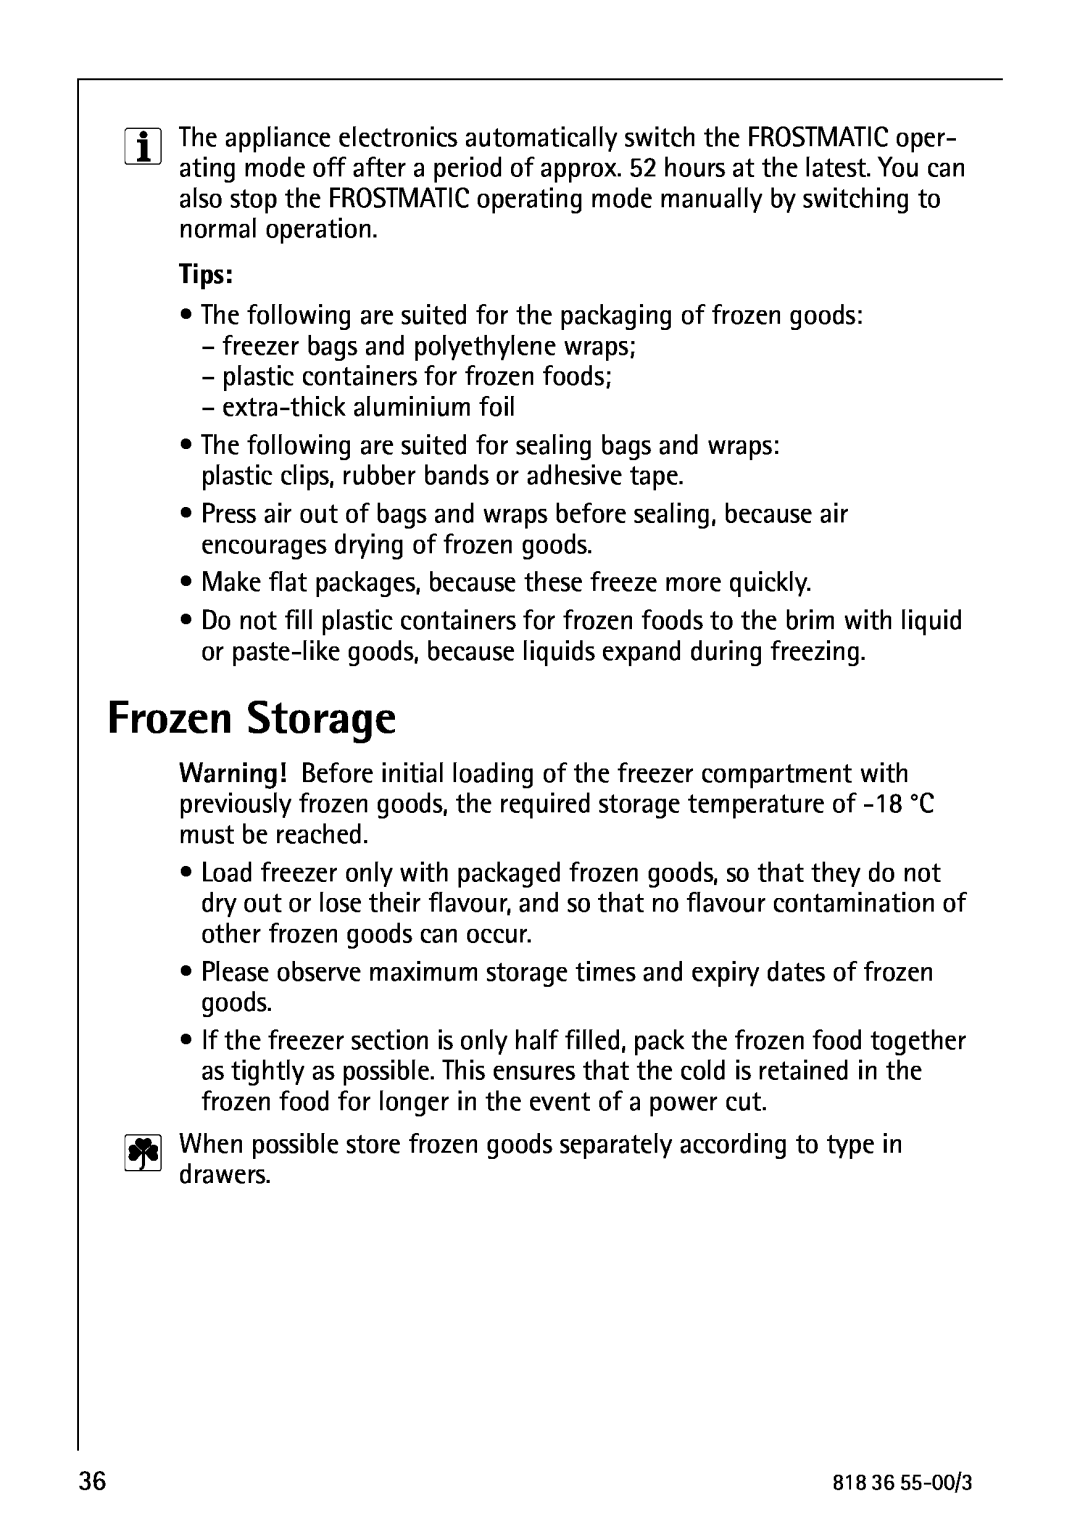 AEG 86378-KG operating instructions Frozen Storage, Tips 